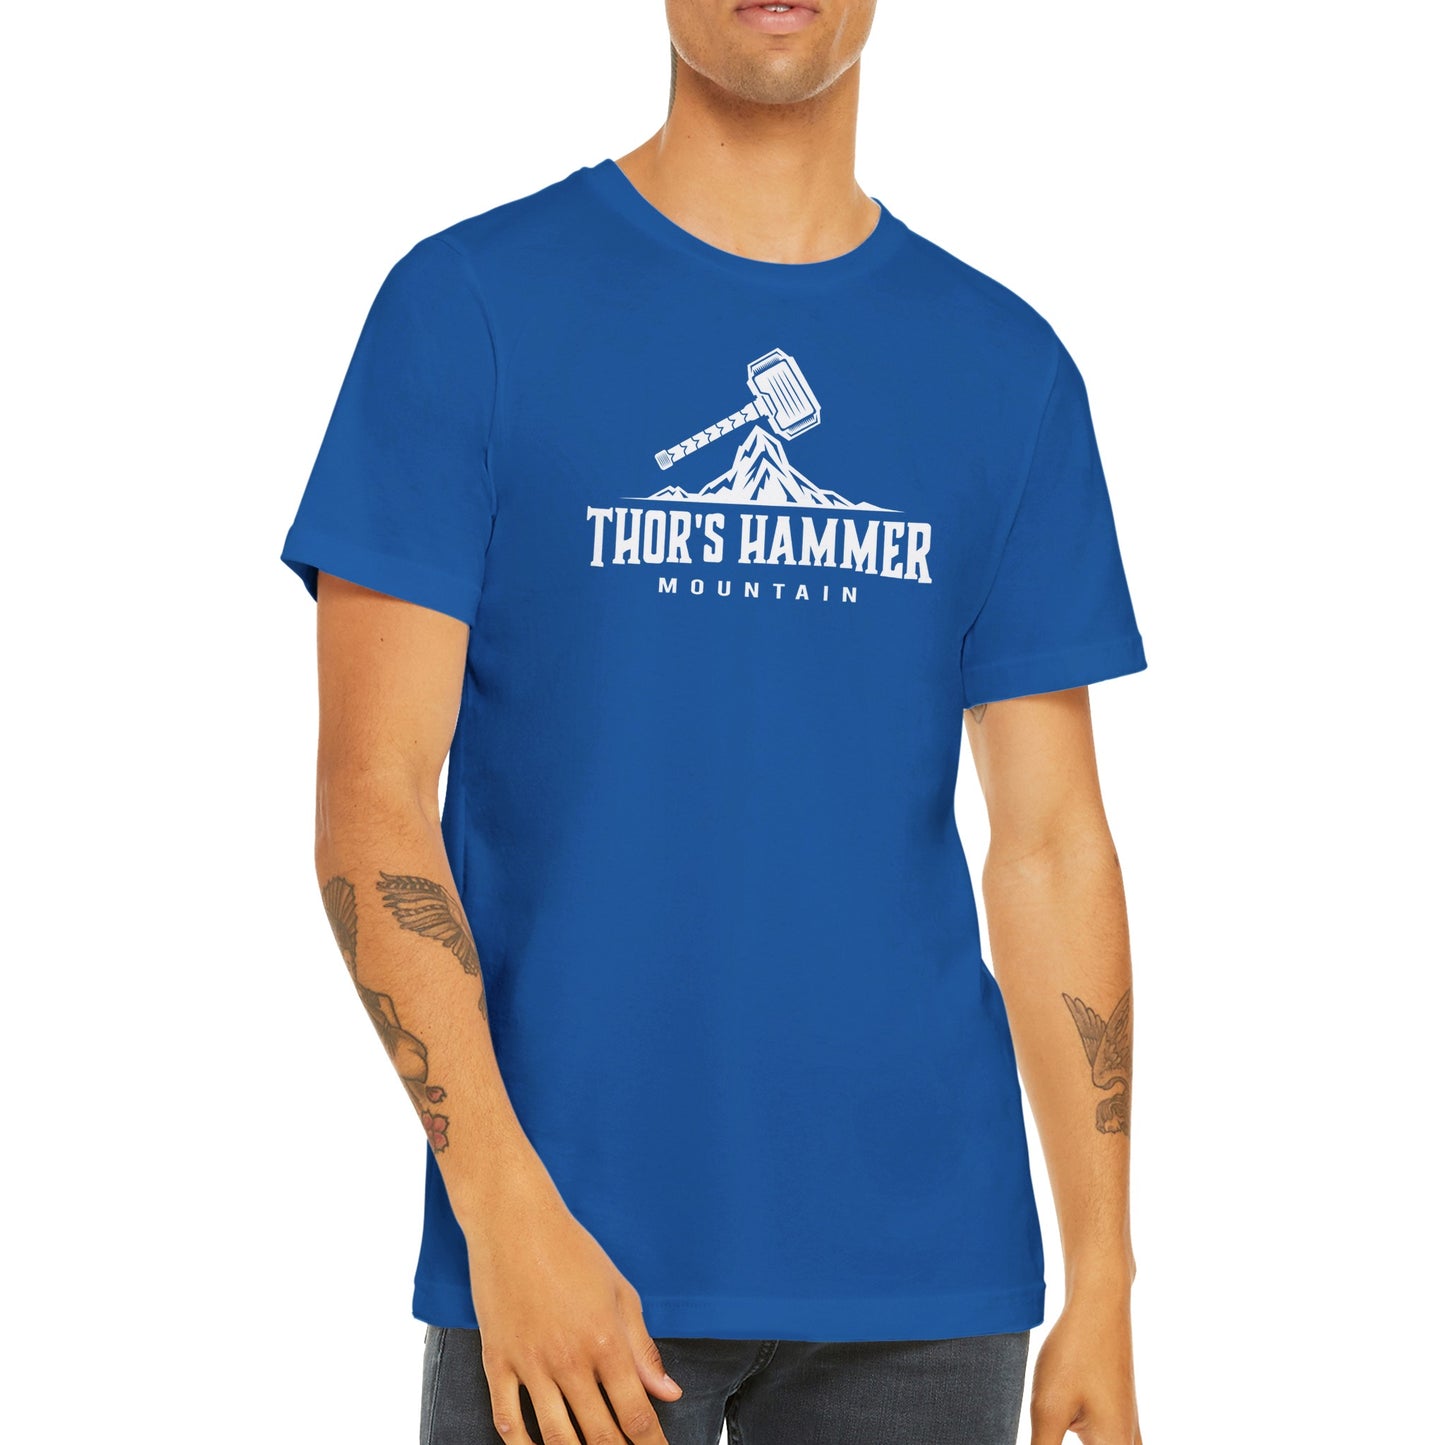 Thors hammer mountain T-shirt